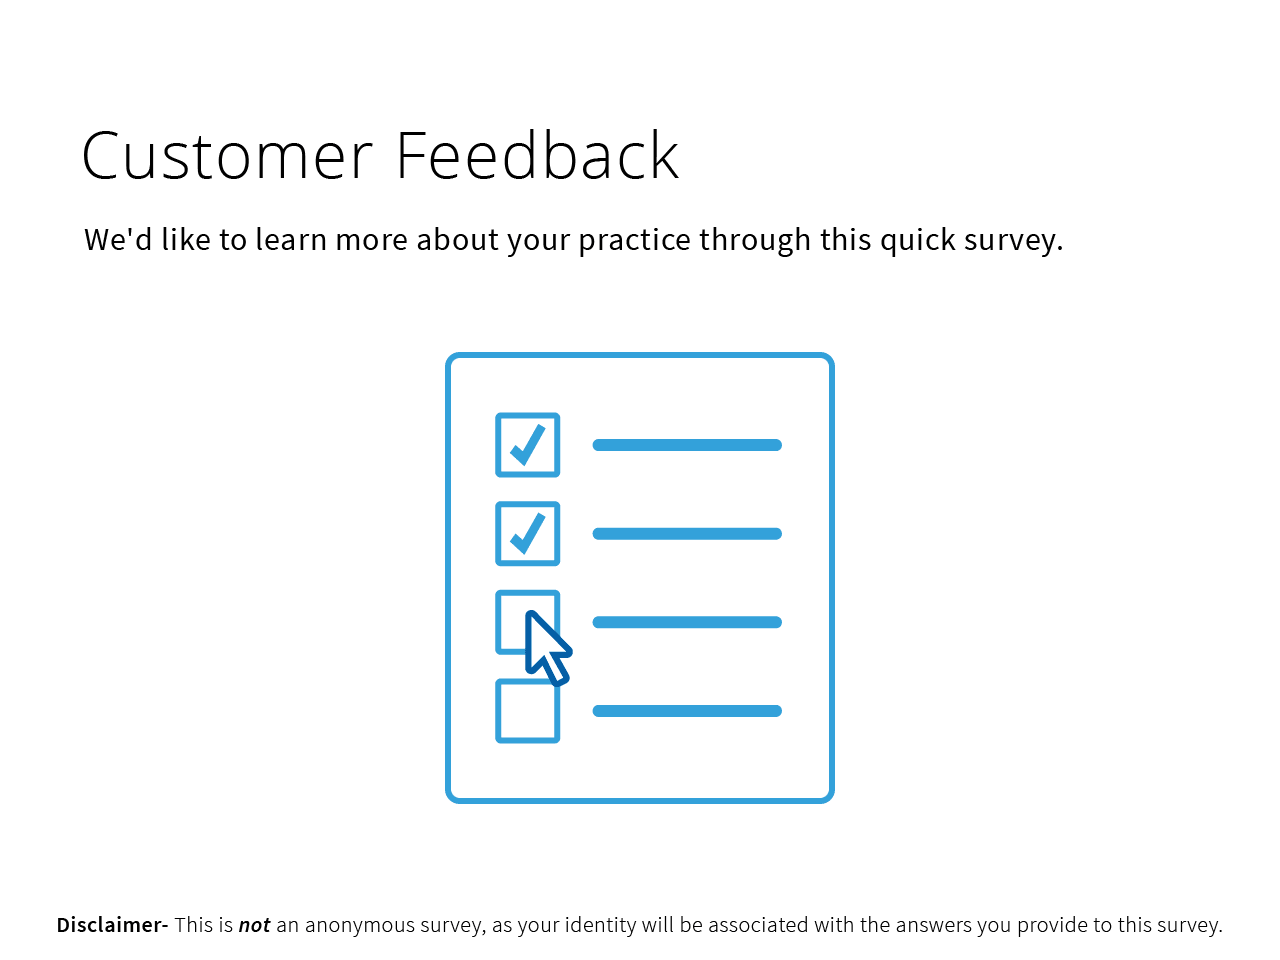 Customer Feedback Survey